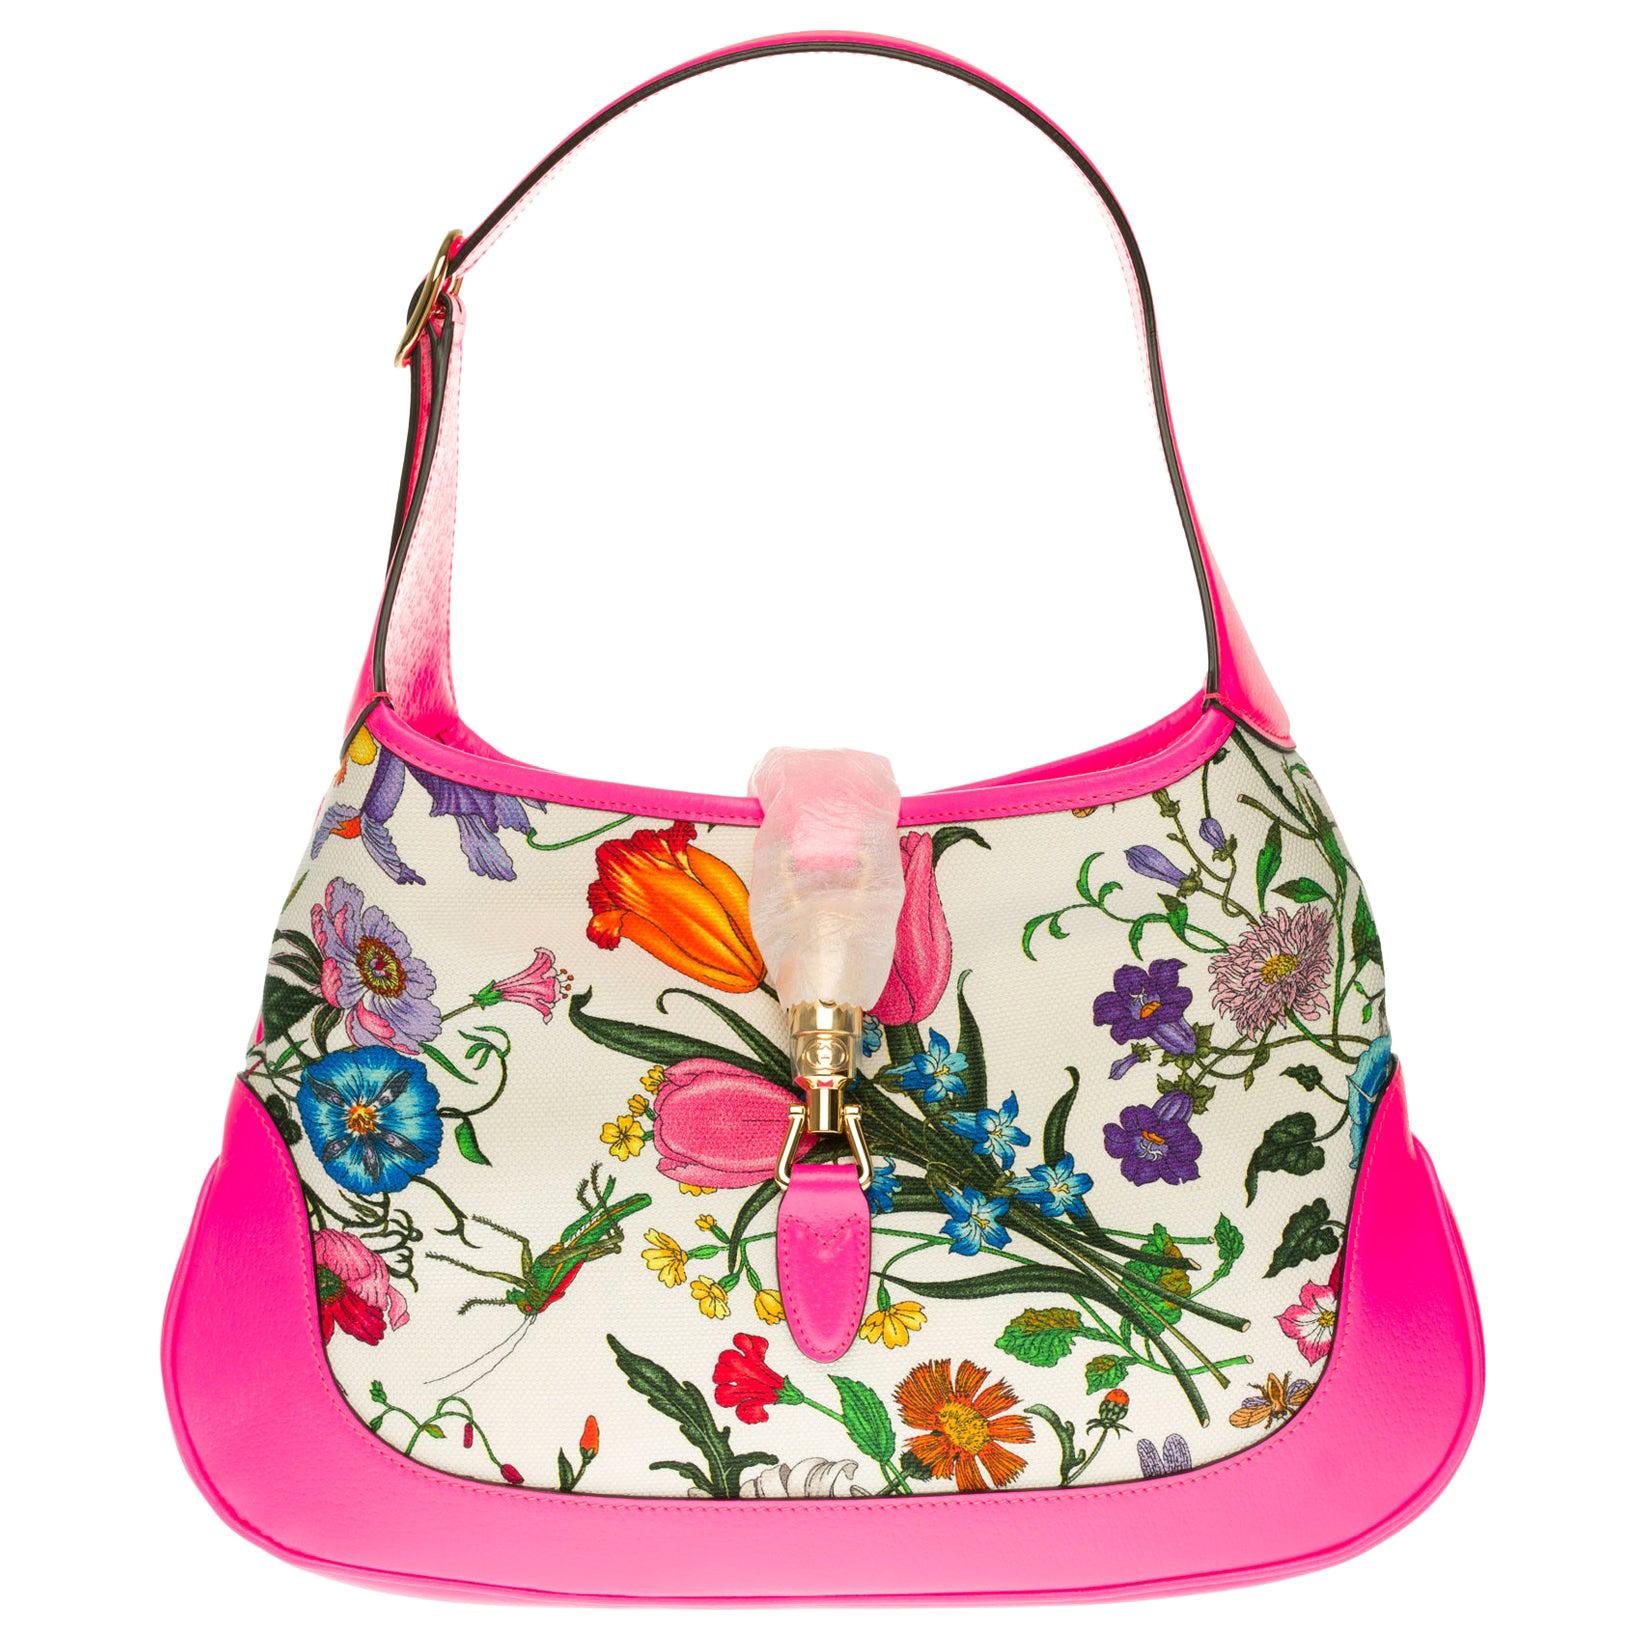 Brand New/ Gucci Jackie Flora shoulder bag in pink leather